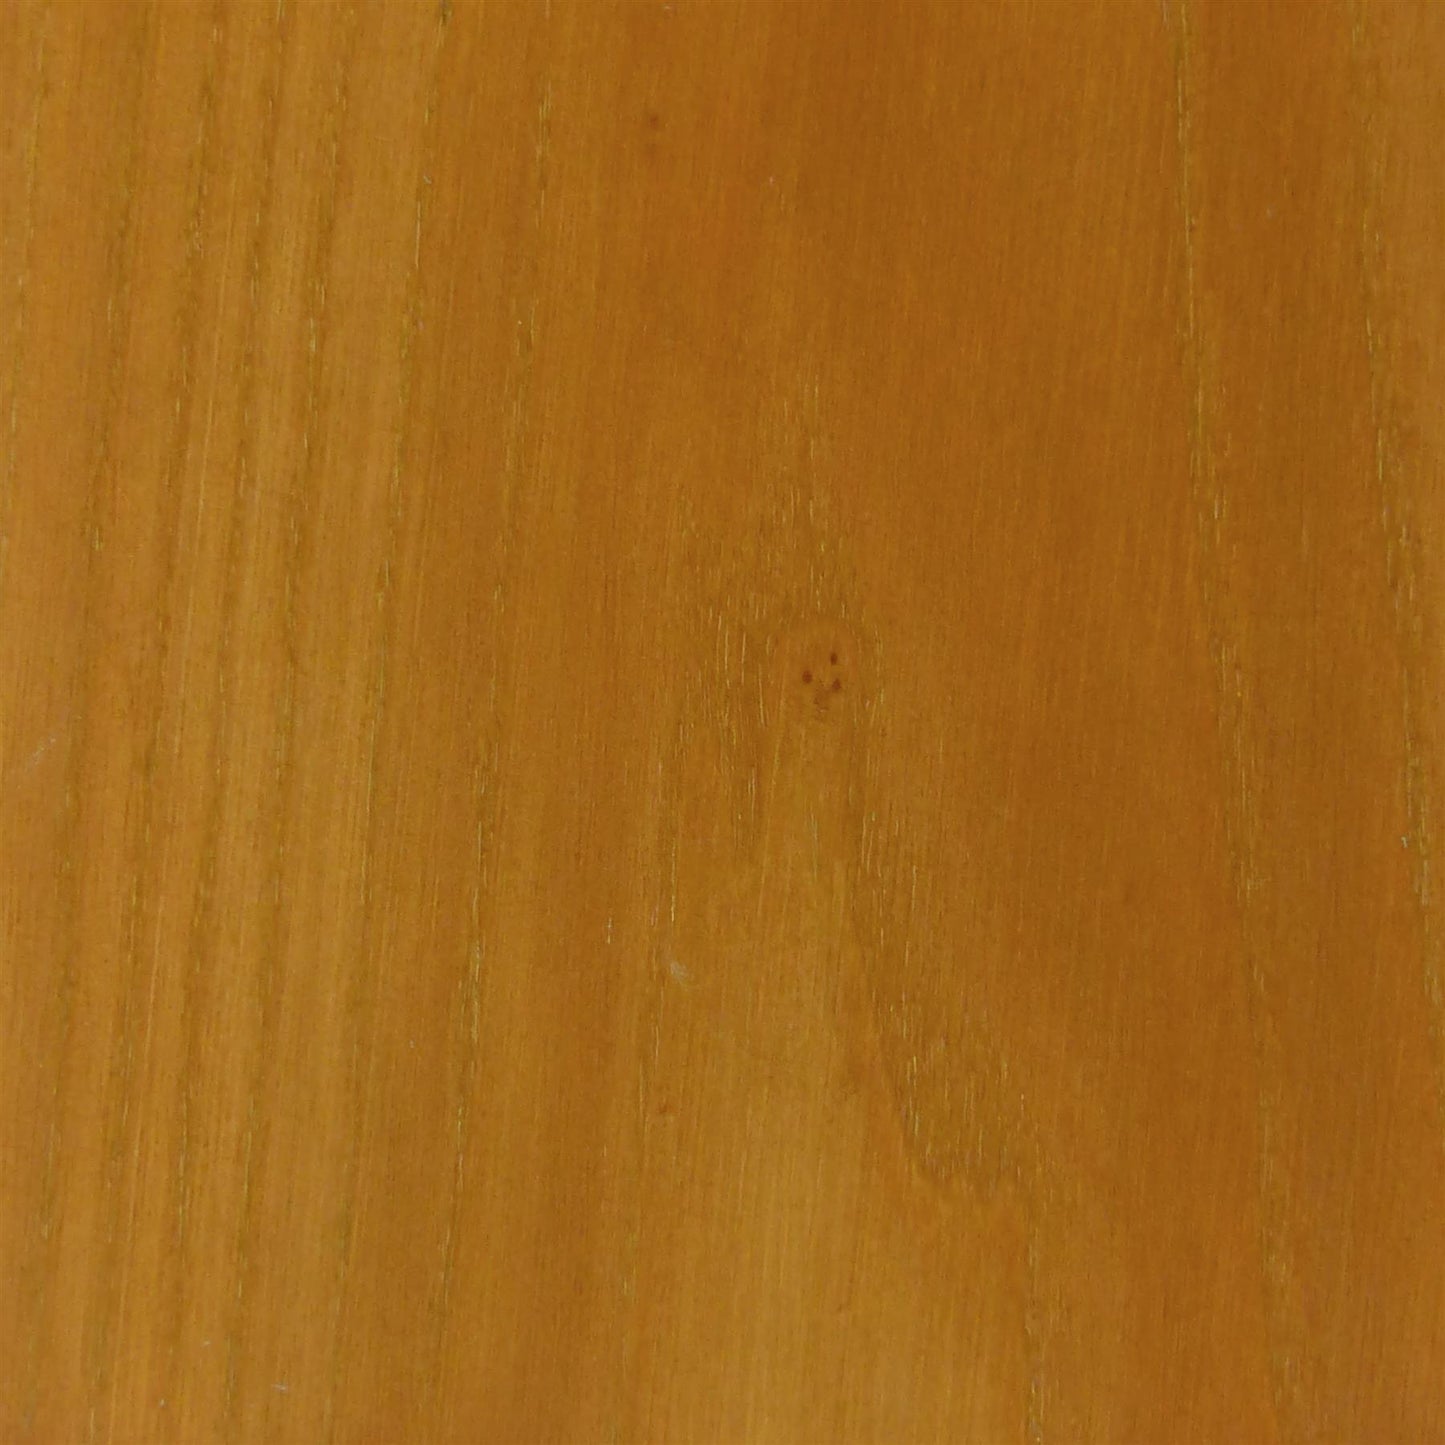 dartfords Golden Oak Interior Water Based Wood Dye - 230ml Tin